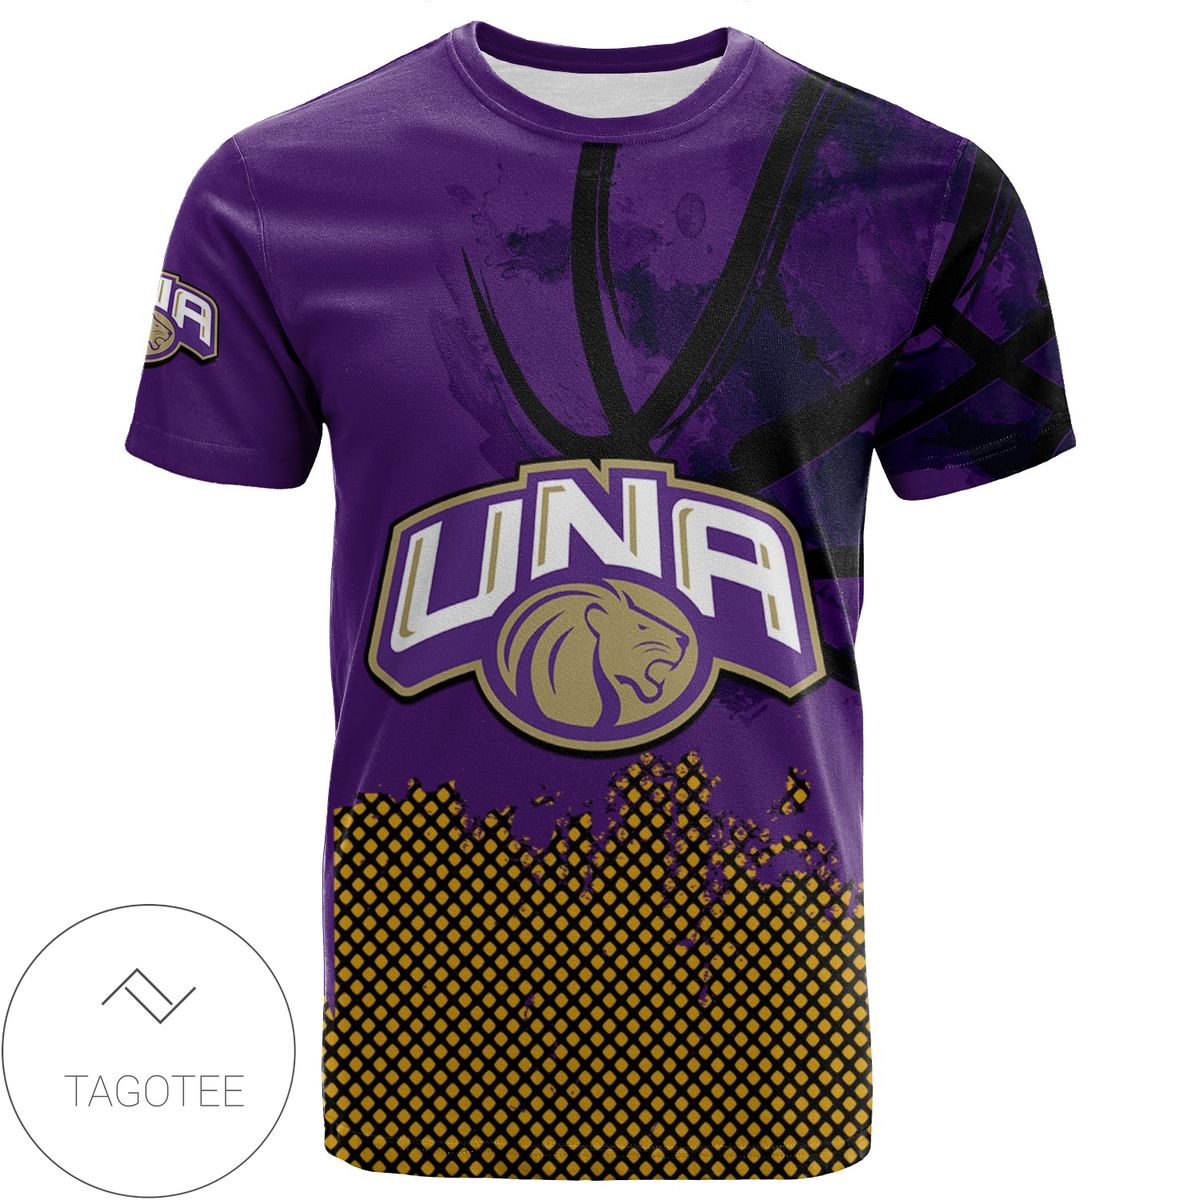 North Alabama Lions All Over Print T-shirt Men's Basketball Net Grunge Pattern- NCAA